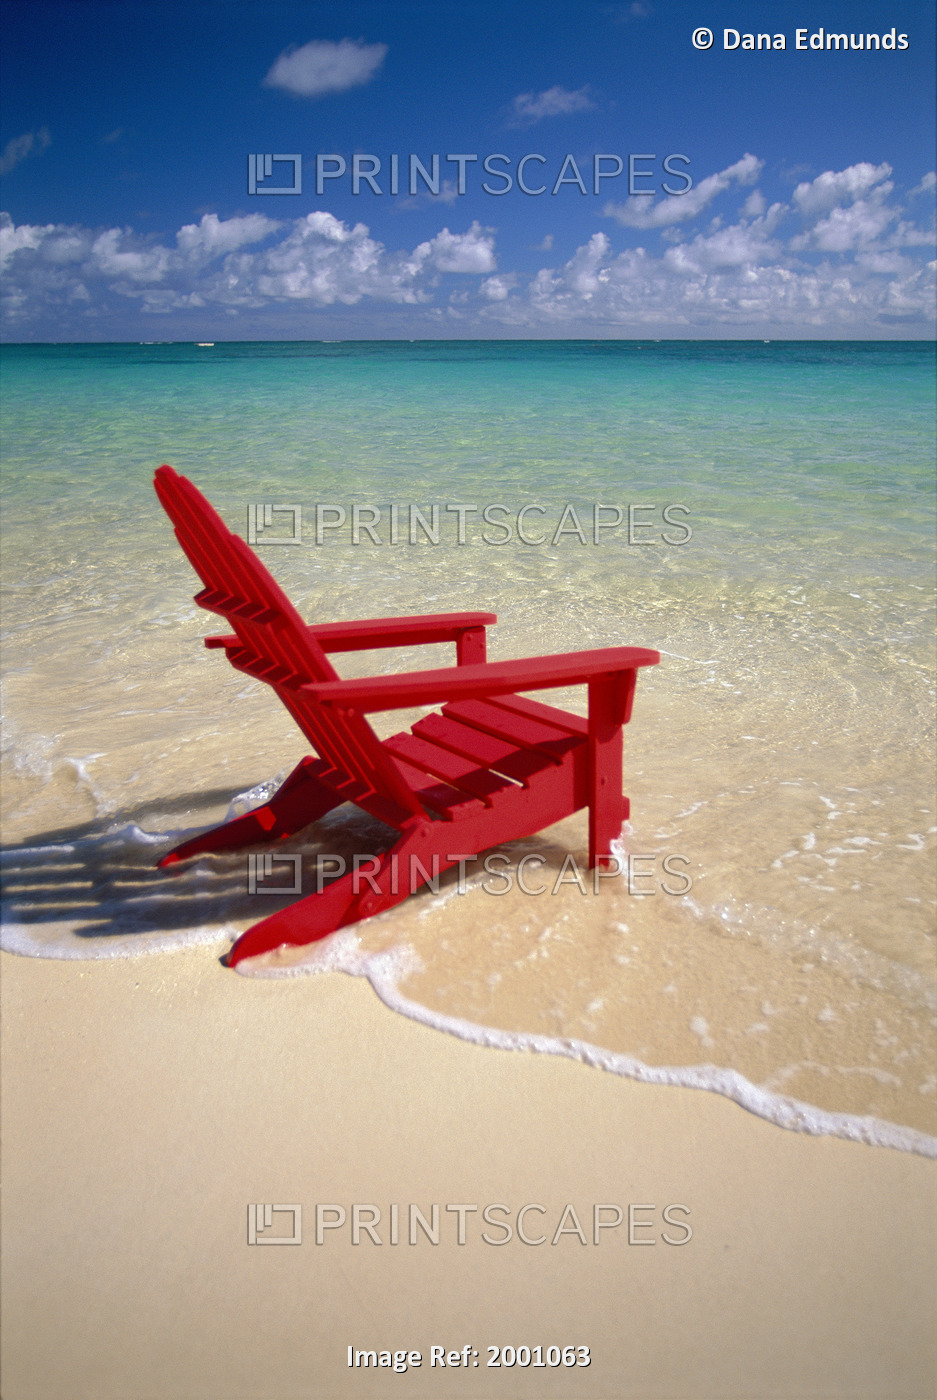 Red Beach Chair Along Shoreline, Turquoise Ocean, Calm